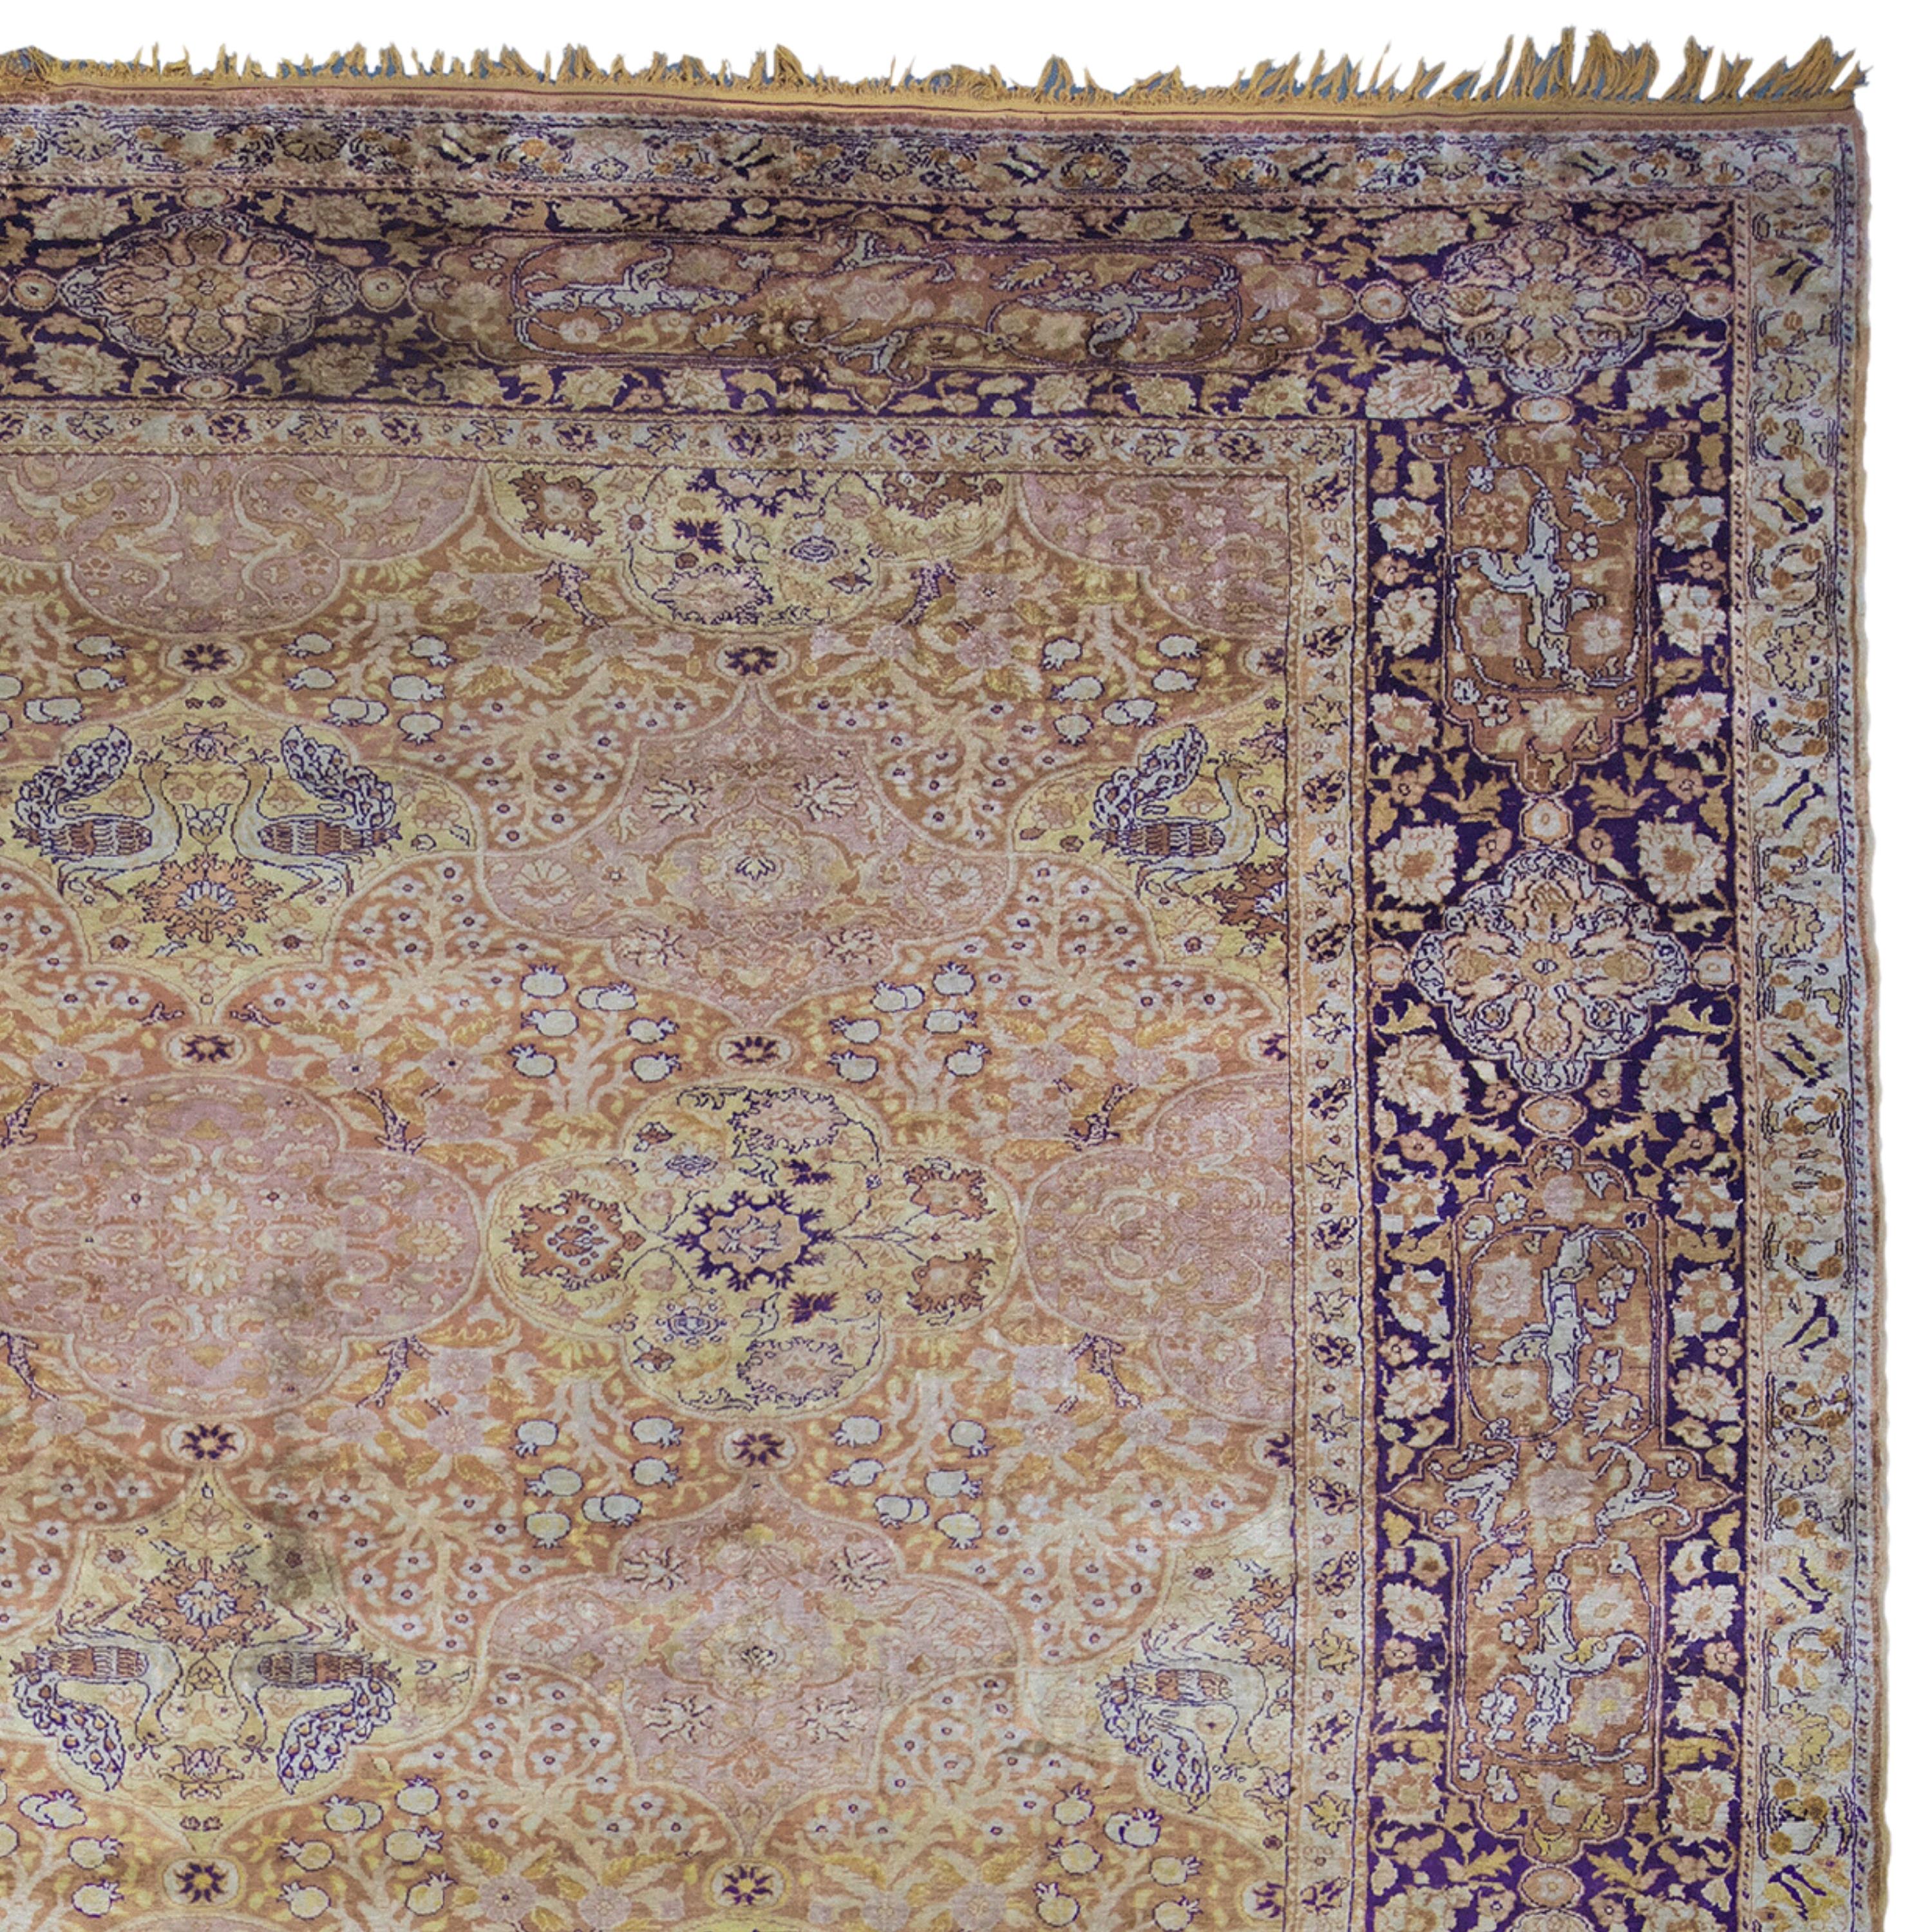 Antique Kayseri Silk Rug - 20th Century Kayseri Silk Carpet, Antique Carpet In Good Condition For Sale In Sultanahmet, 34